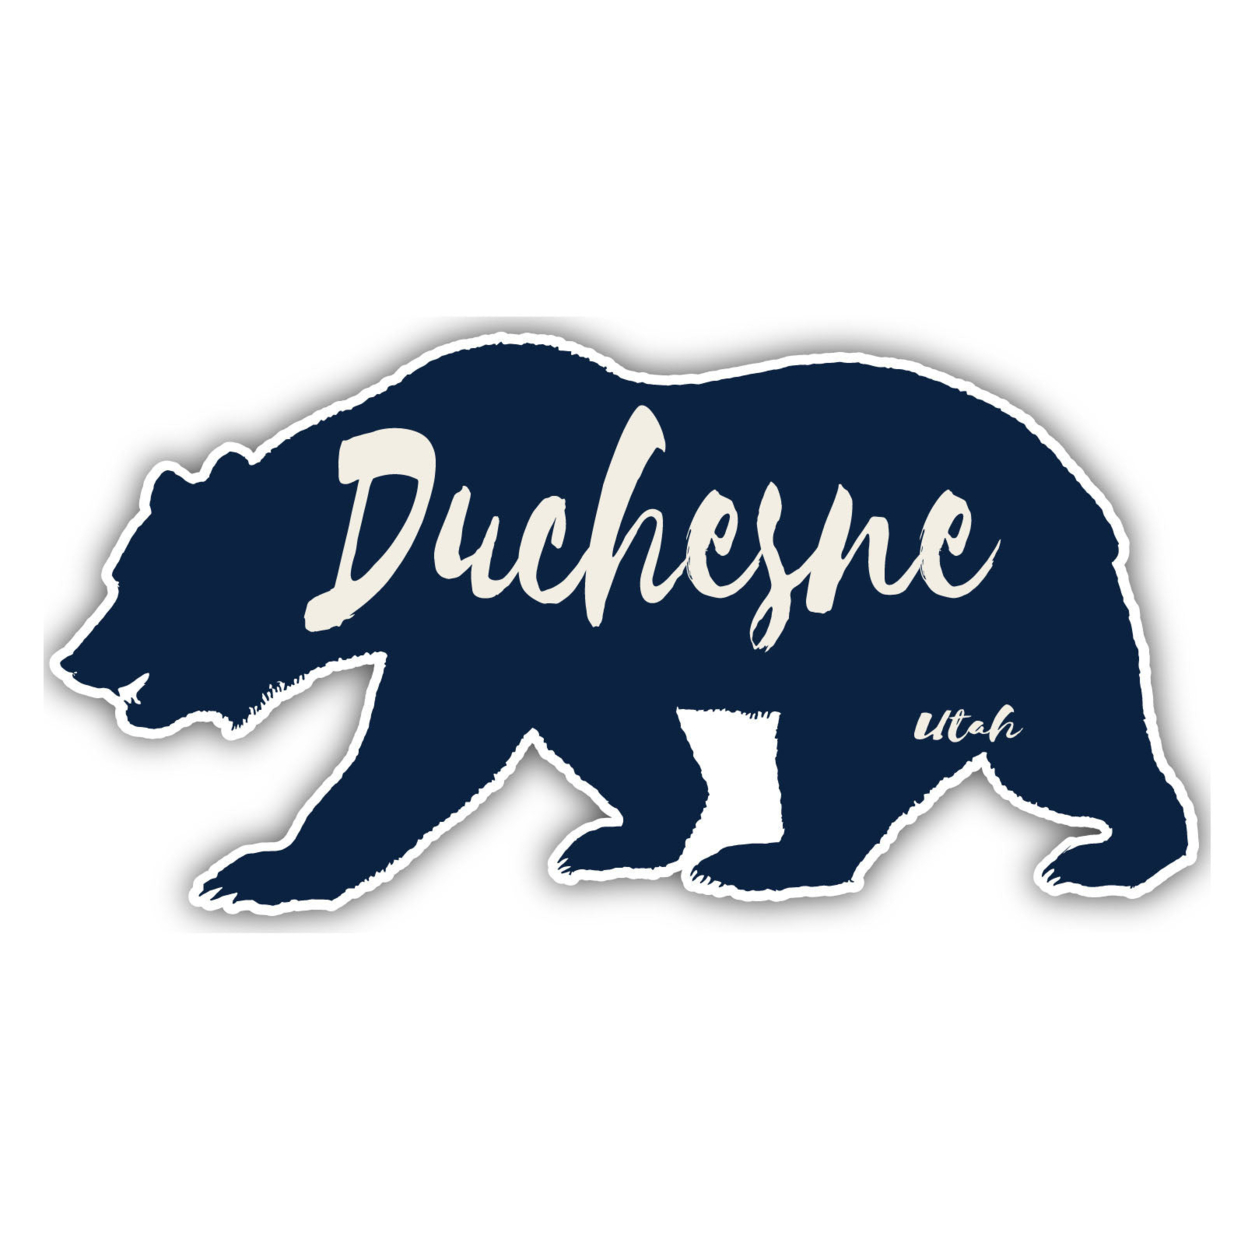 Duchesne Utah Souvenir Decorative Stickers (Choose Theme And Size) - 4-Pack, 10-Inch, Bear